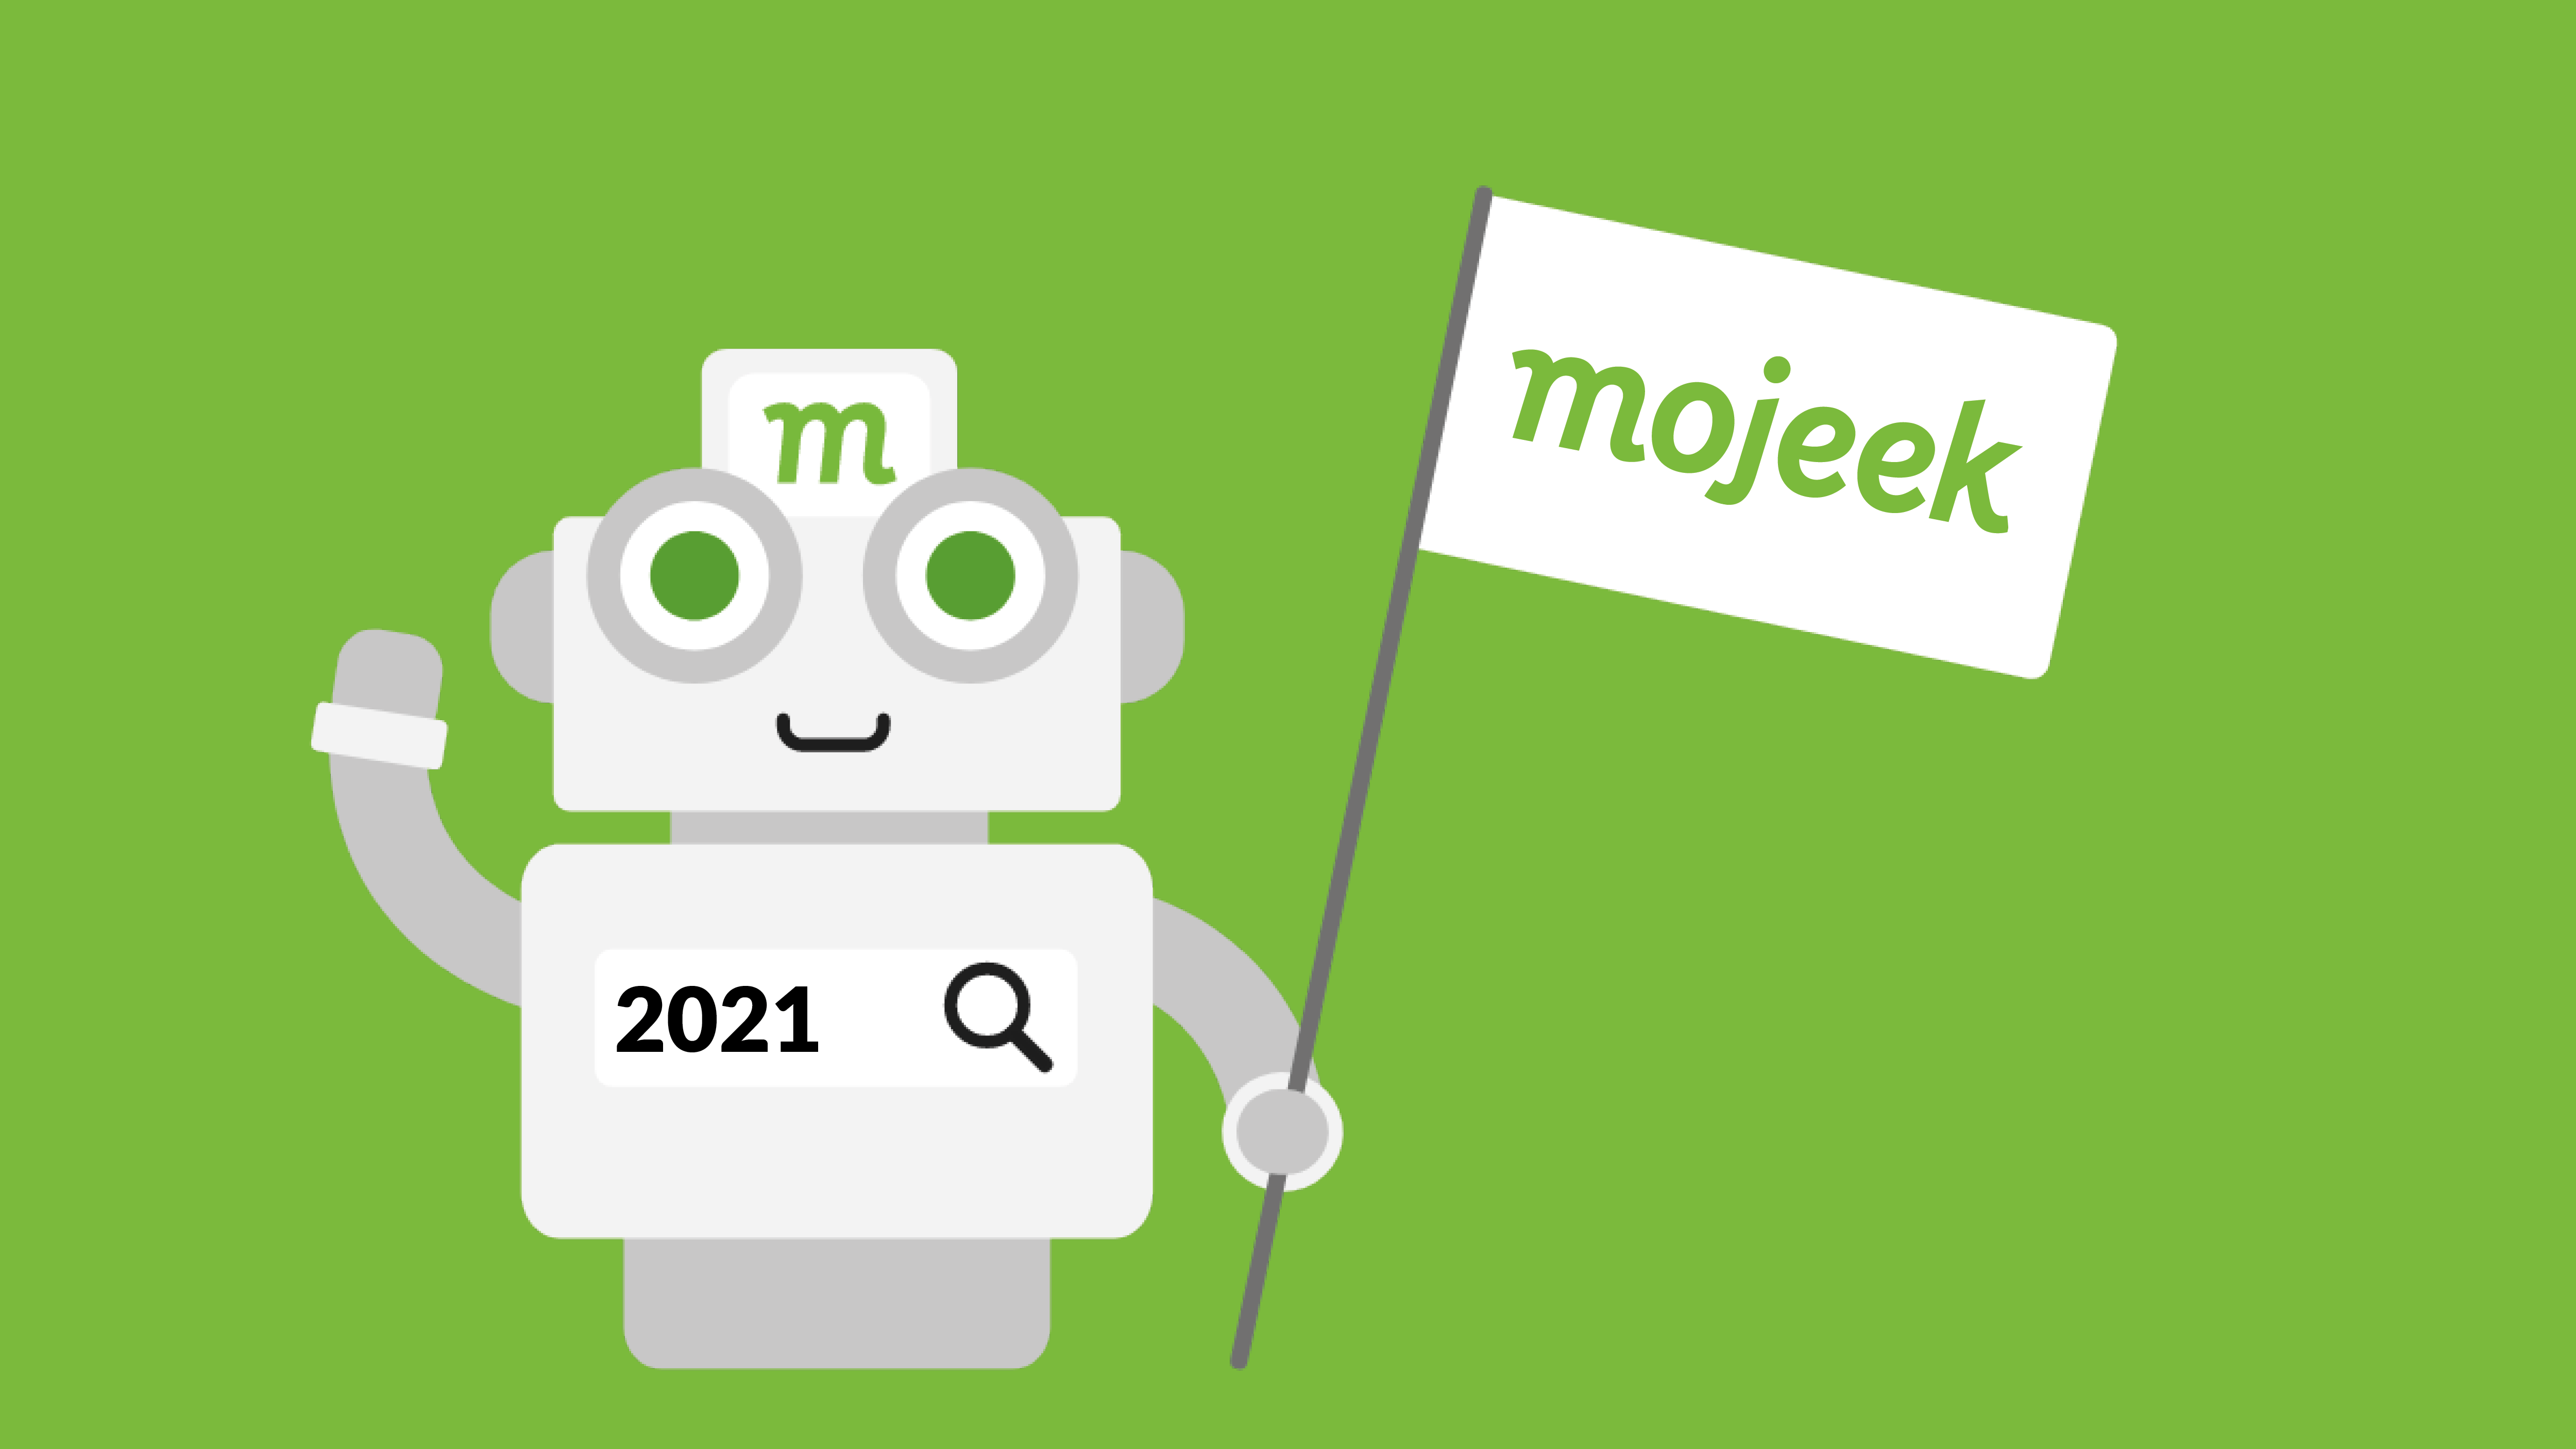 Mojeek's mascot, Mojeekbot, holding a 2021 flag